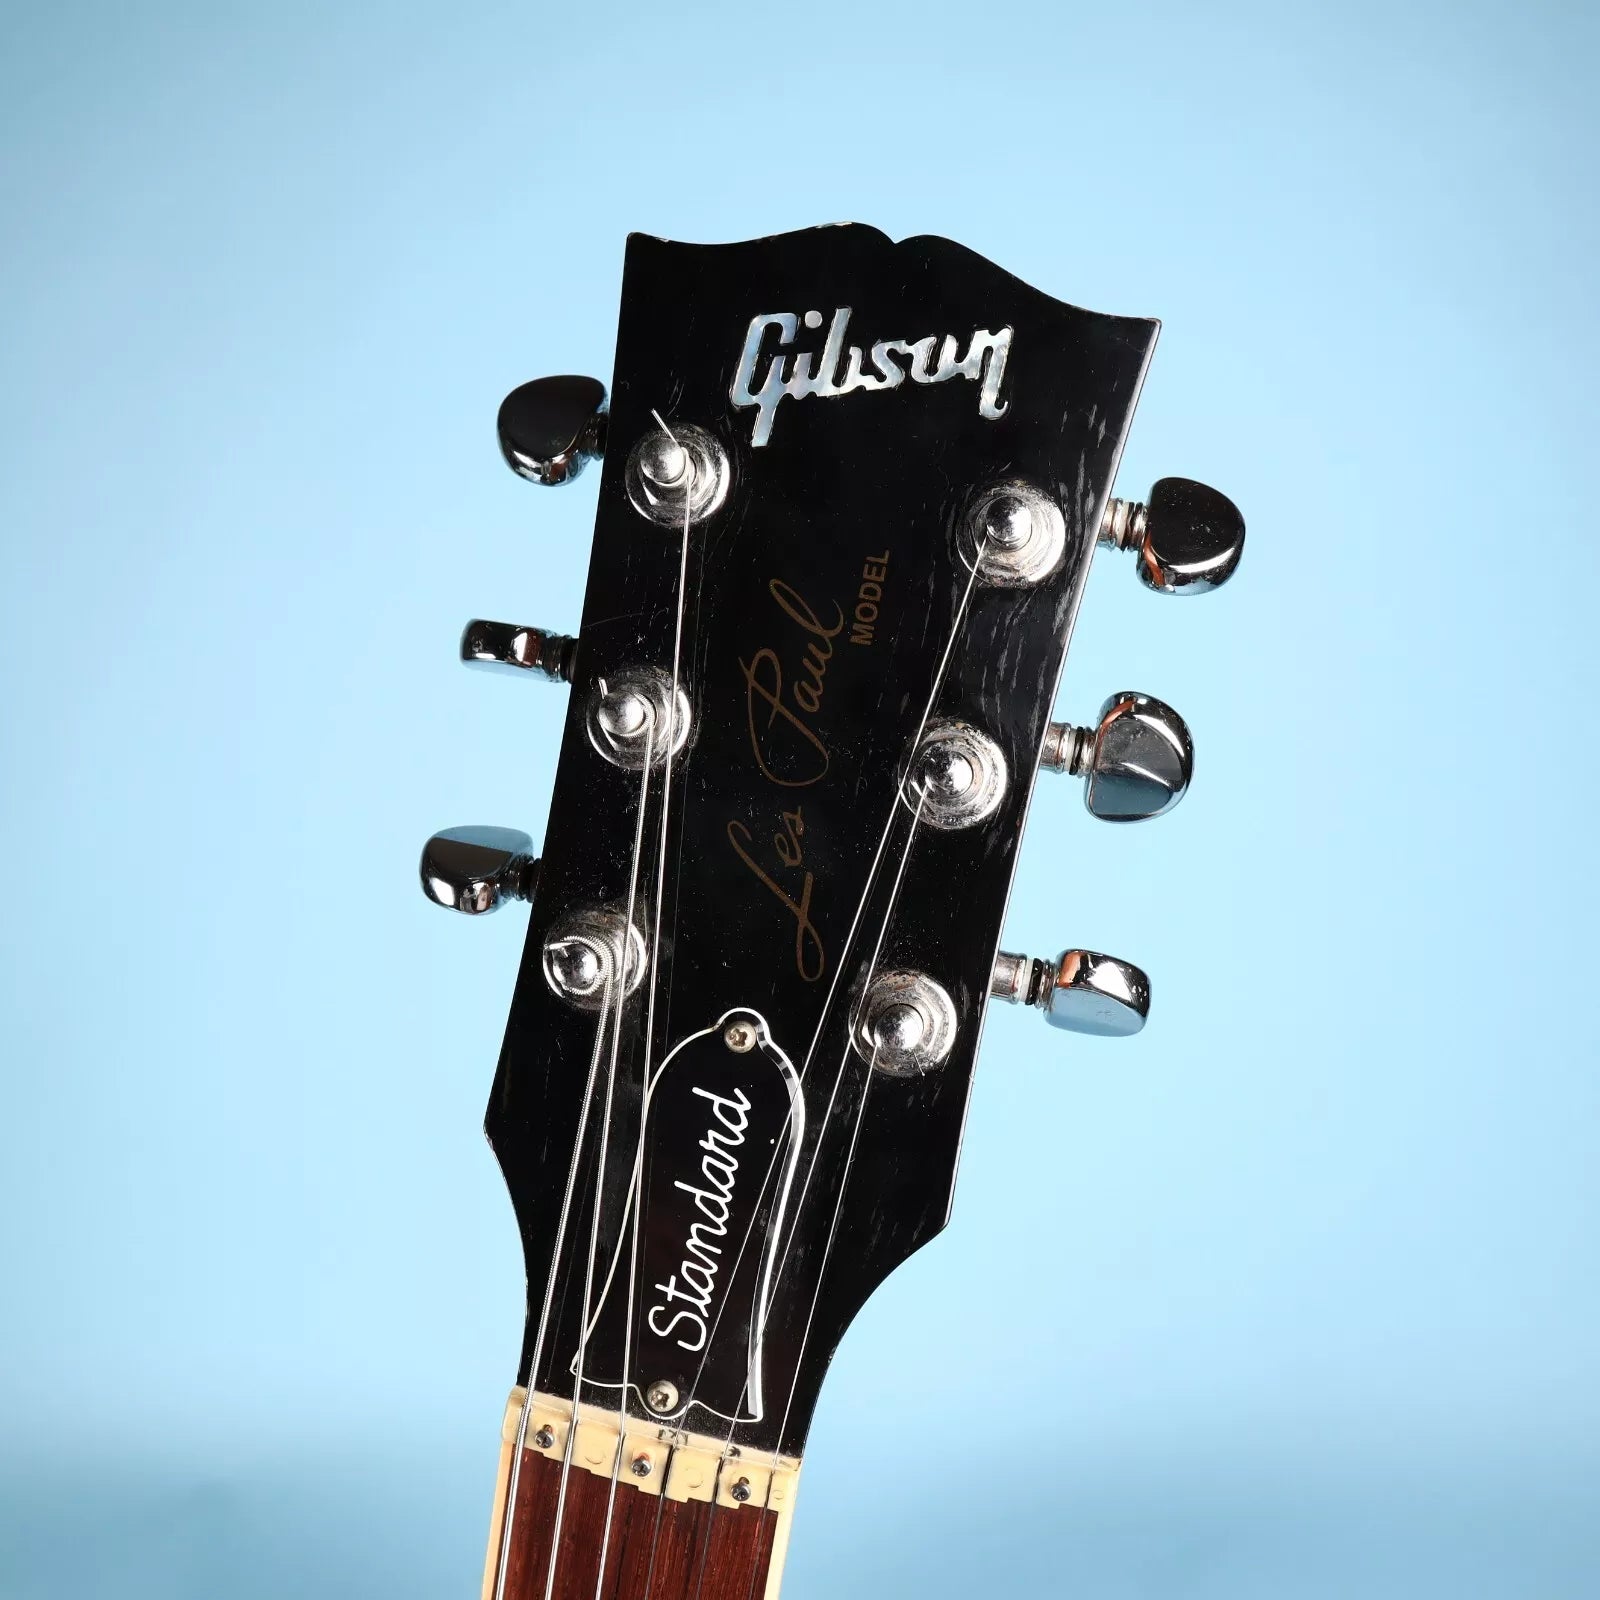 Guitar 1998 Gibson Les Paul Standard Sunburst Electric Guitar with Gibson Hard Case guitar